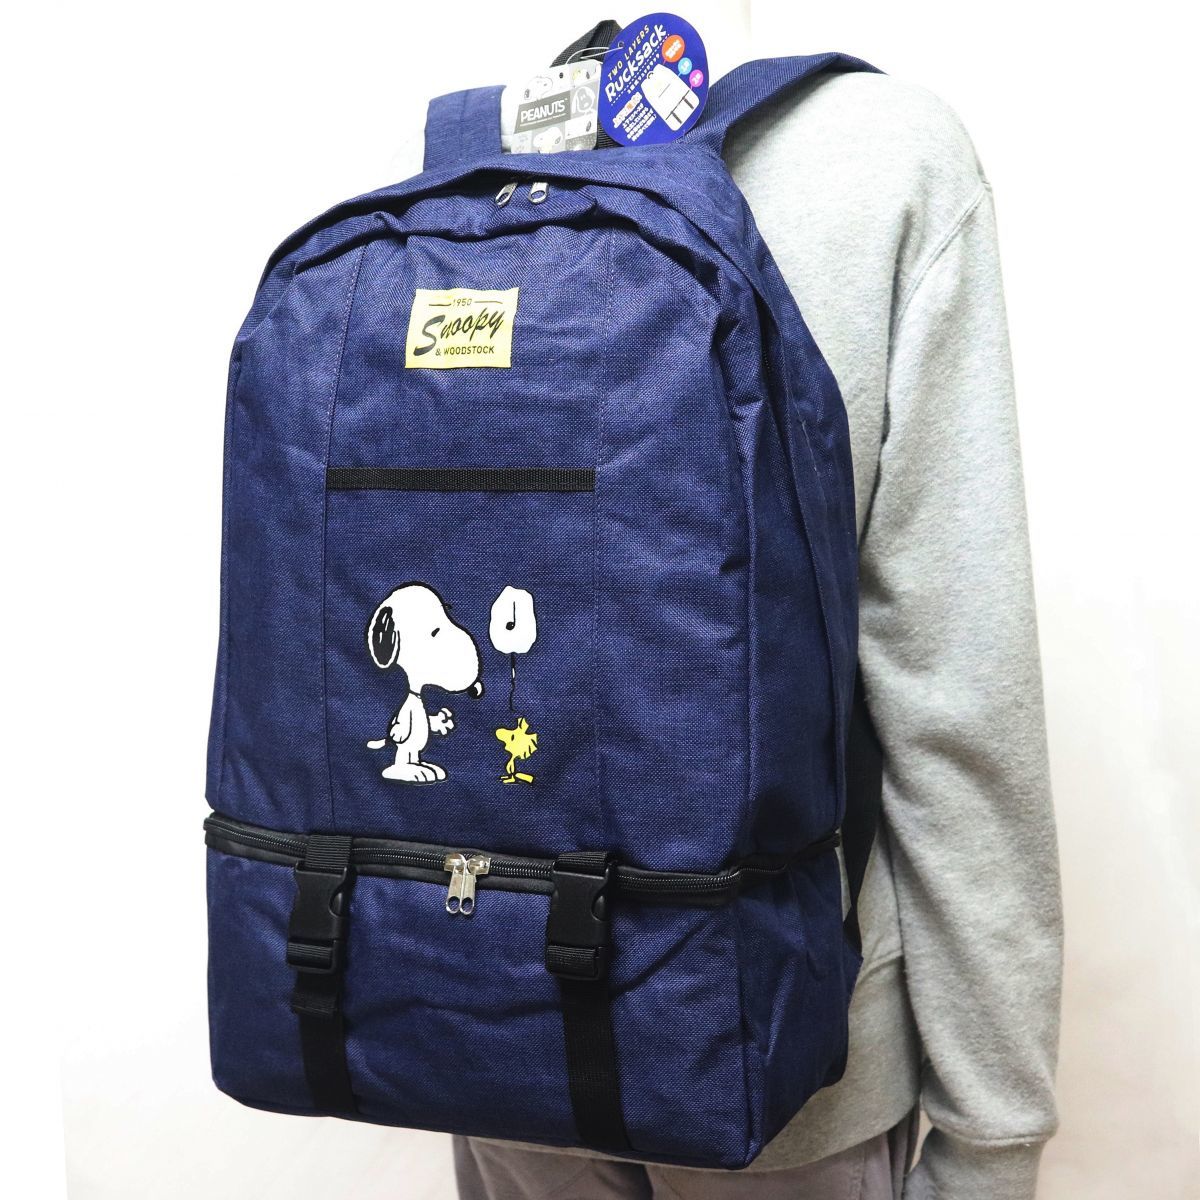 * Snoopy Peanuts SNOOPY PEANUTS новый товар 2 слой тип рюкзак Day Pack рюкзак портфель темно-синий [SNOOPYA-NVY1N] один шесть *QWER*